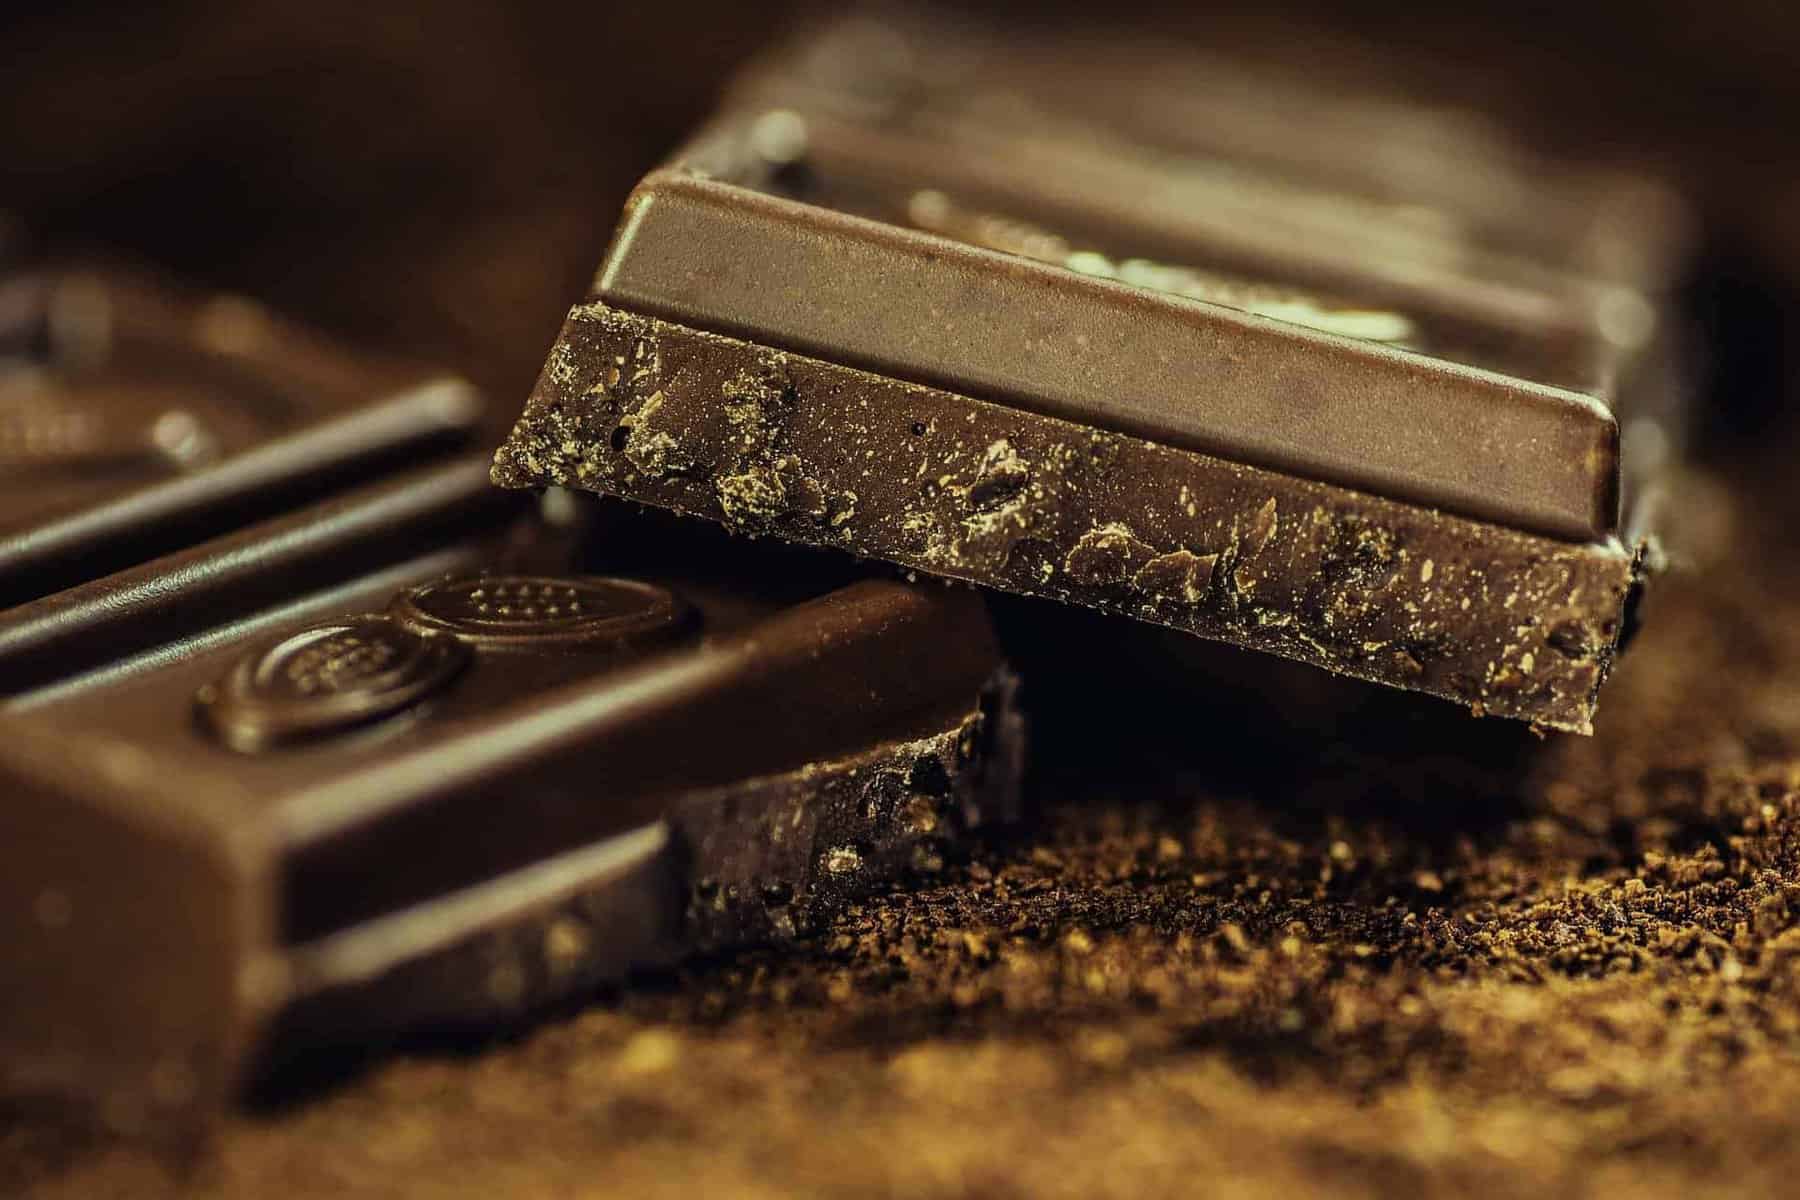 Schokolade in Großaufnahme. /pixabay